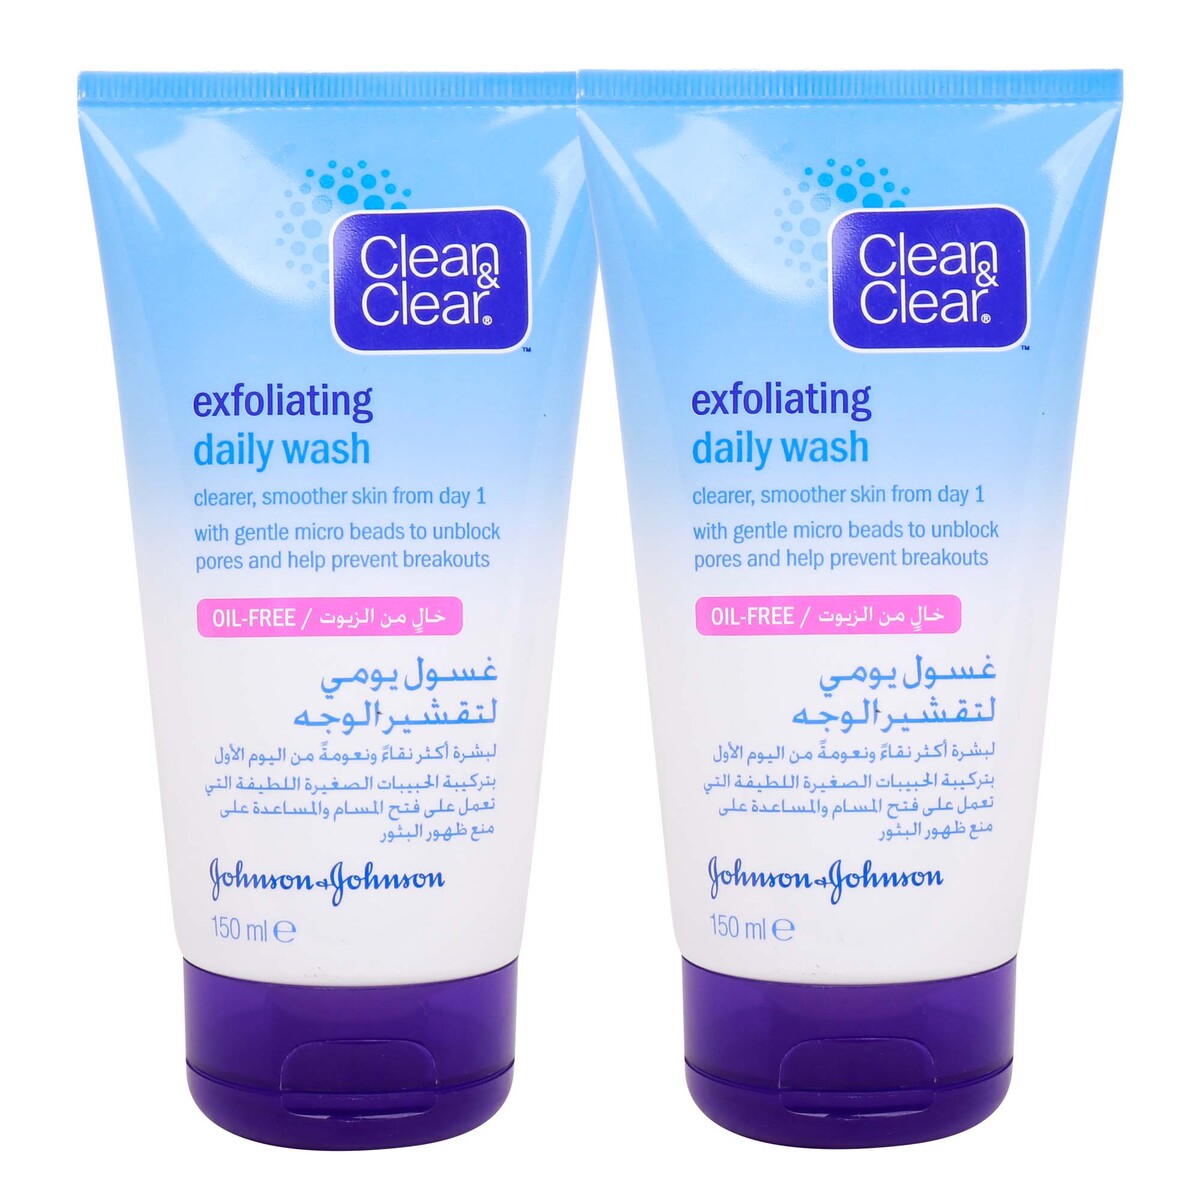 Clean & Clear Exfoliating Daily Wash, 150 ml, 1 + 1